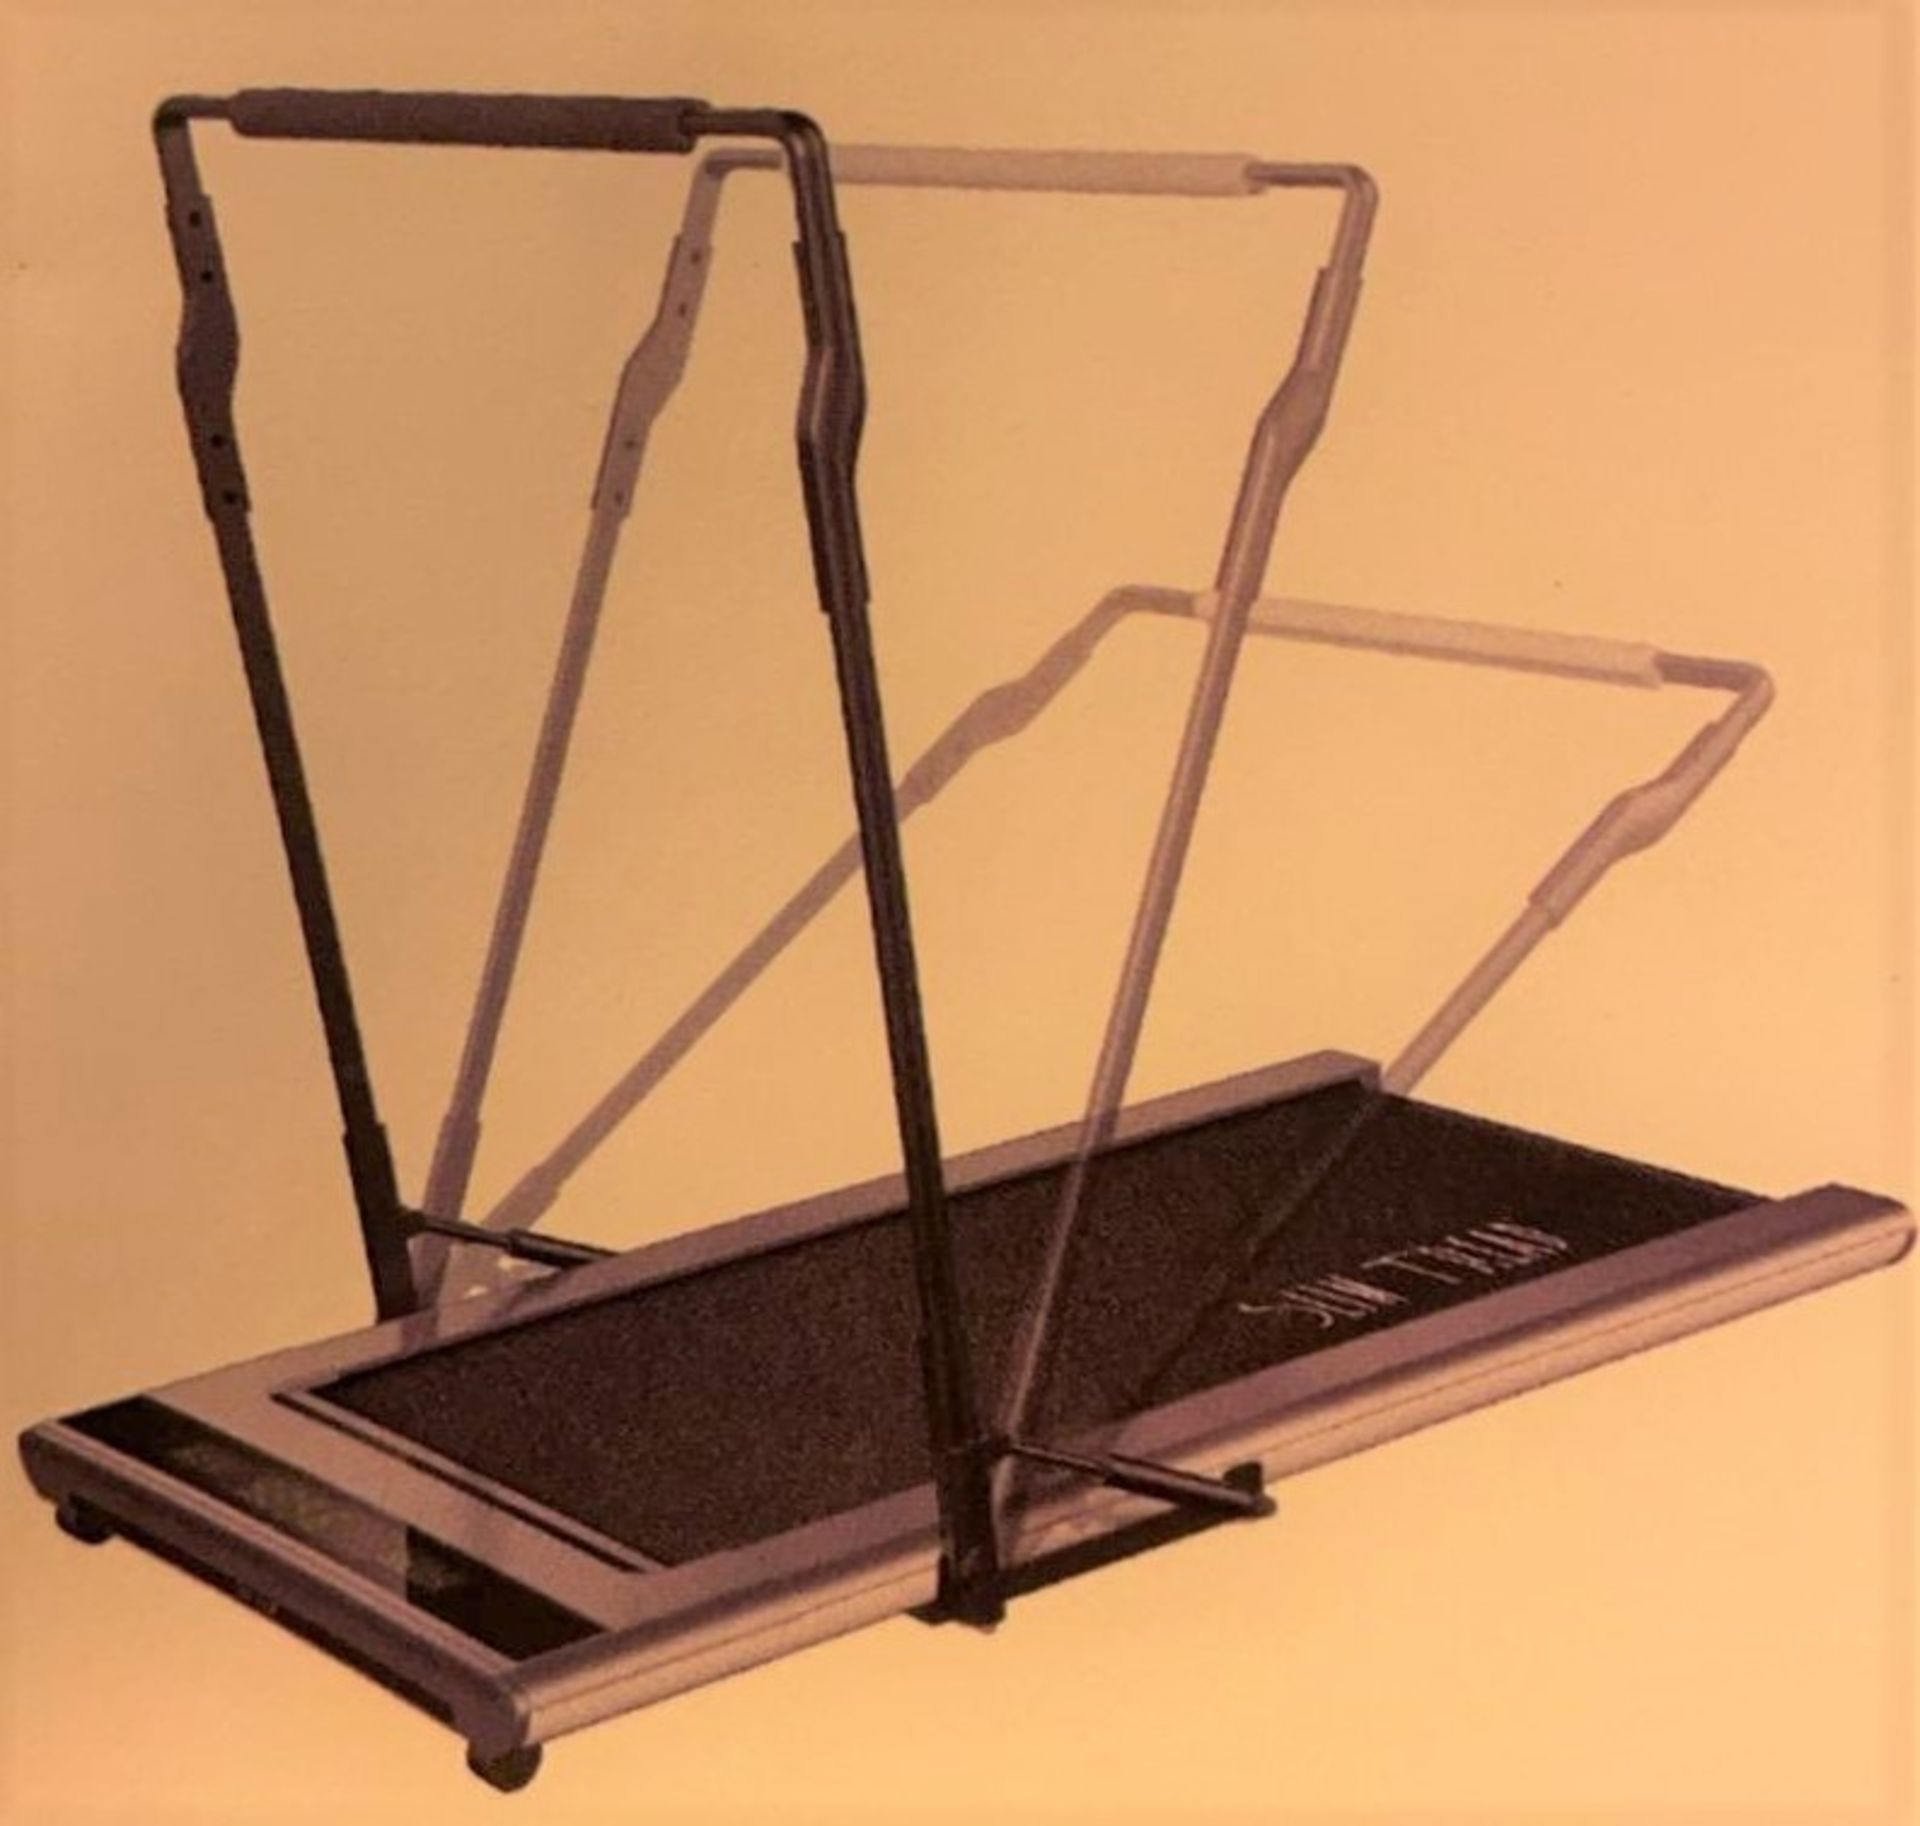 1 x Slim Tread Ultra Thin Smart Treadmill Running / Walking Machine - Lightweight With Folding - Image 5 of 23